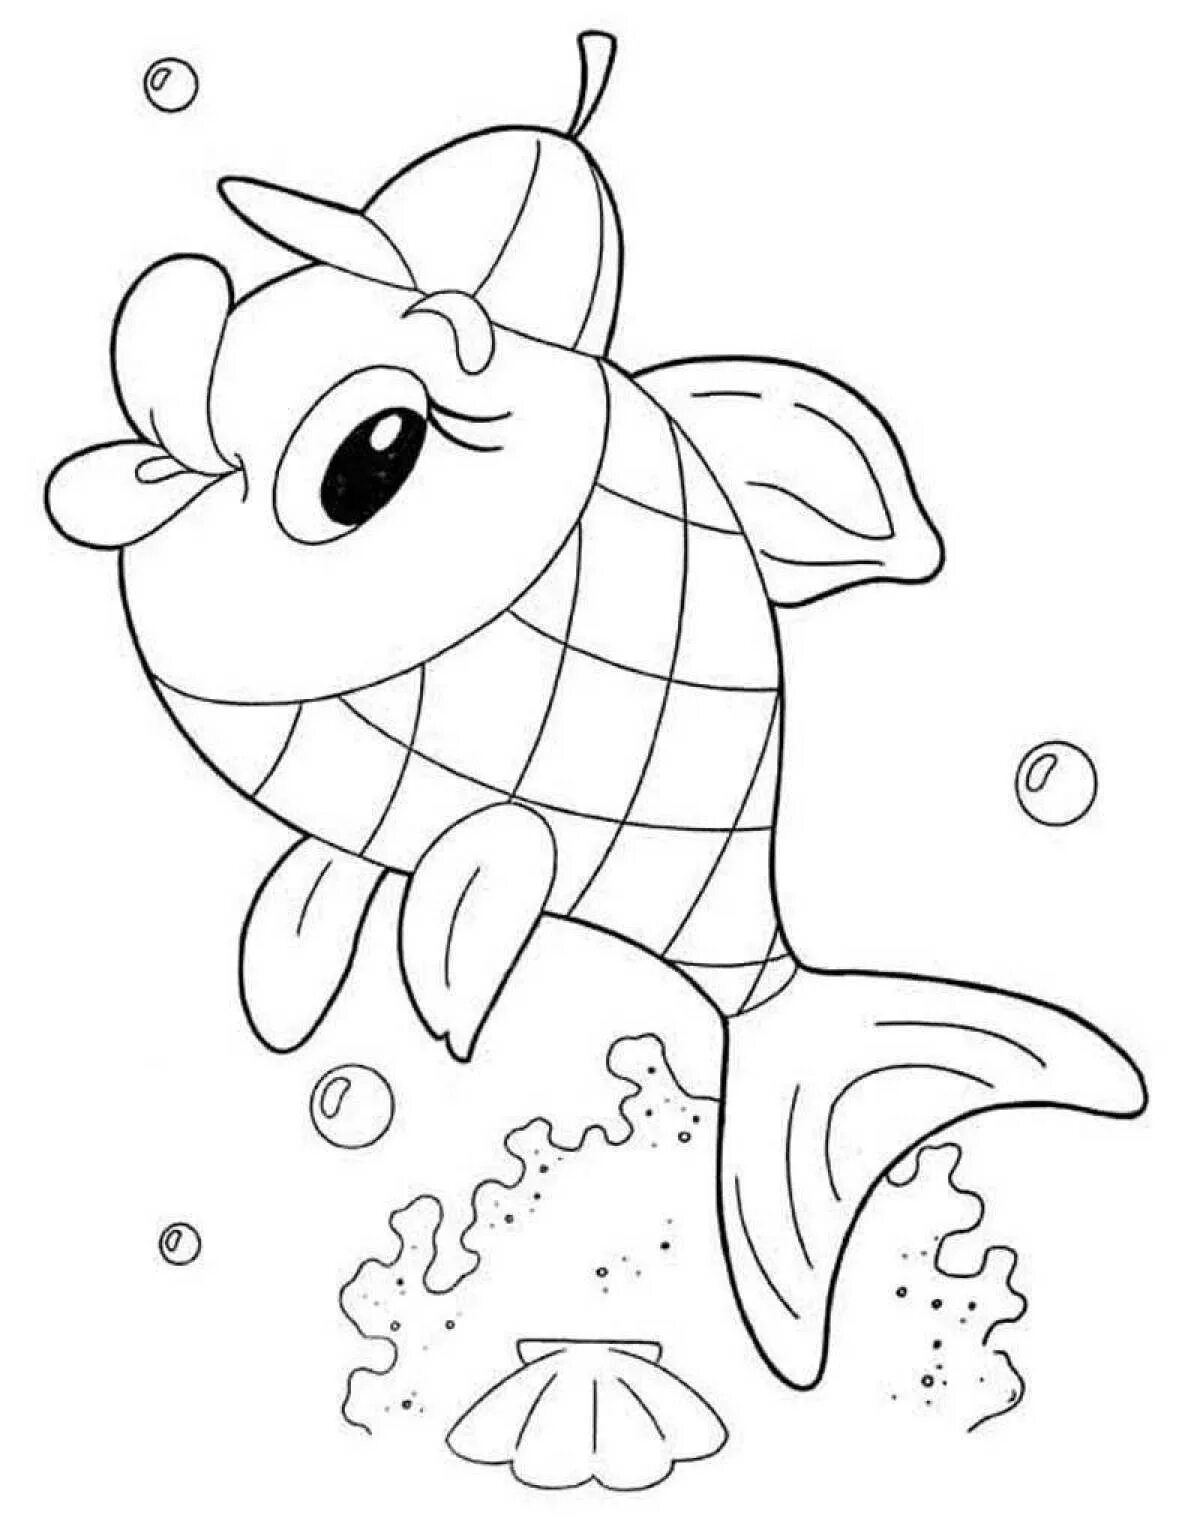 Раскраски рыбки для детей 3 4. Раскраска рыбка. Рыбка раскраска для детей. Рыба раскраска для детей. Рисунок рыбки для раскрашивания.